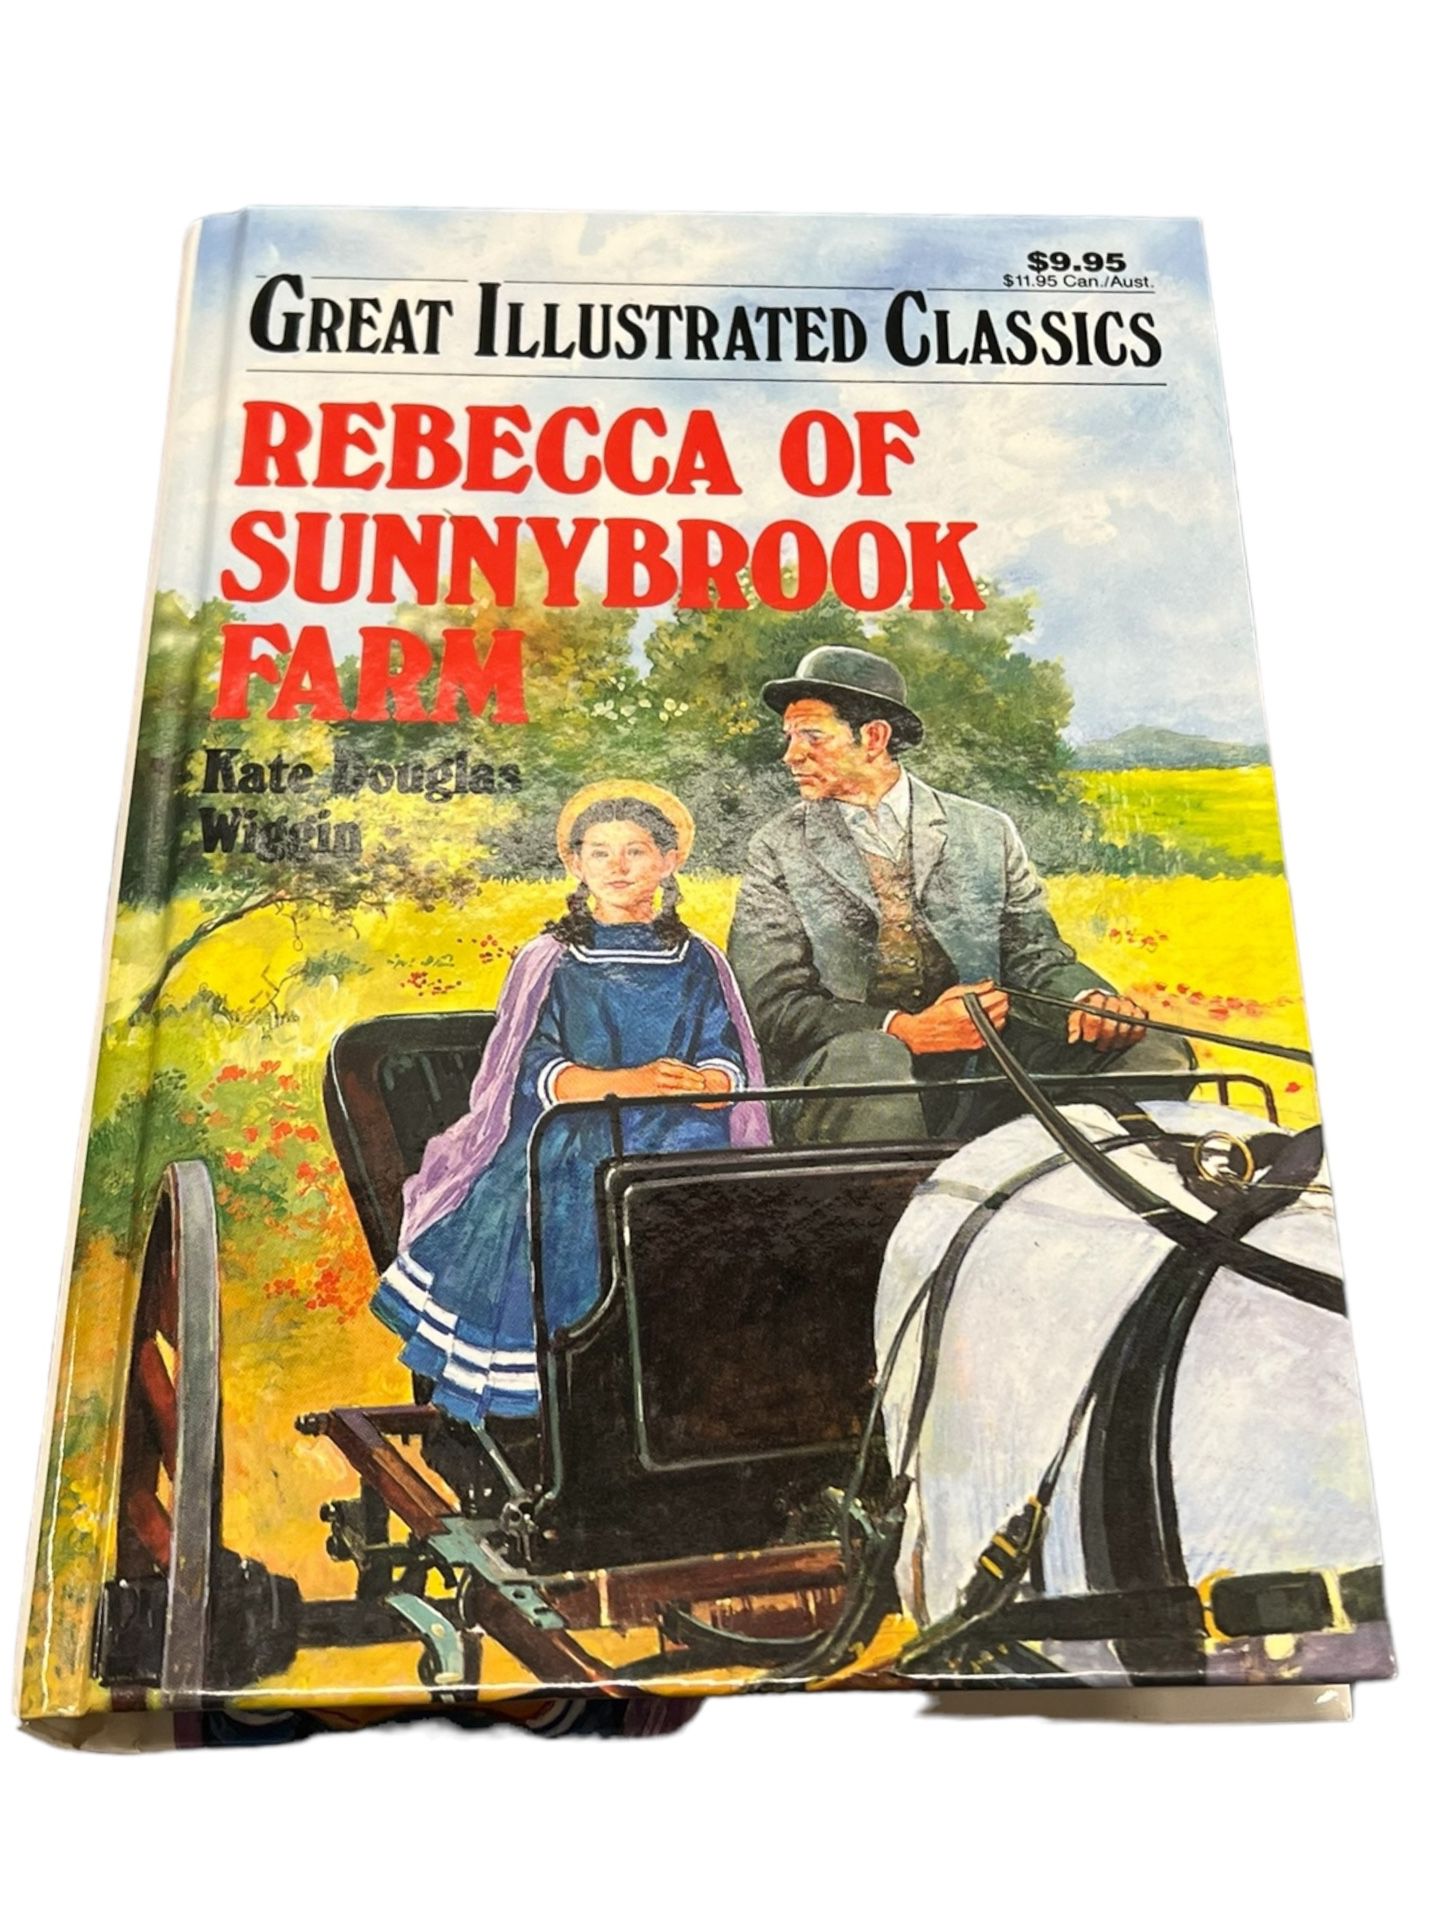 Great Illustrated Classics Ser.: Rebecca of Sunnybrook Farm by Kate Douglas Explore the charming world of Rebecca of Sunnybrook Farm with this beautif